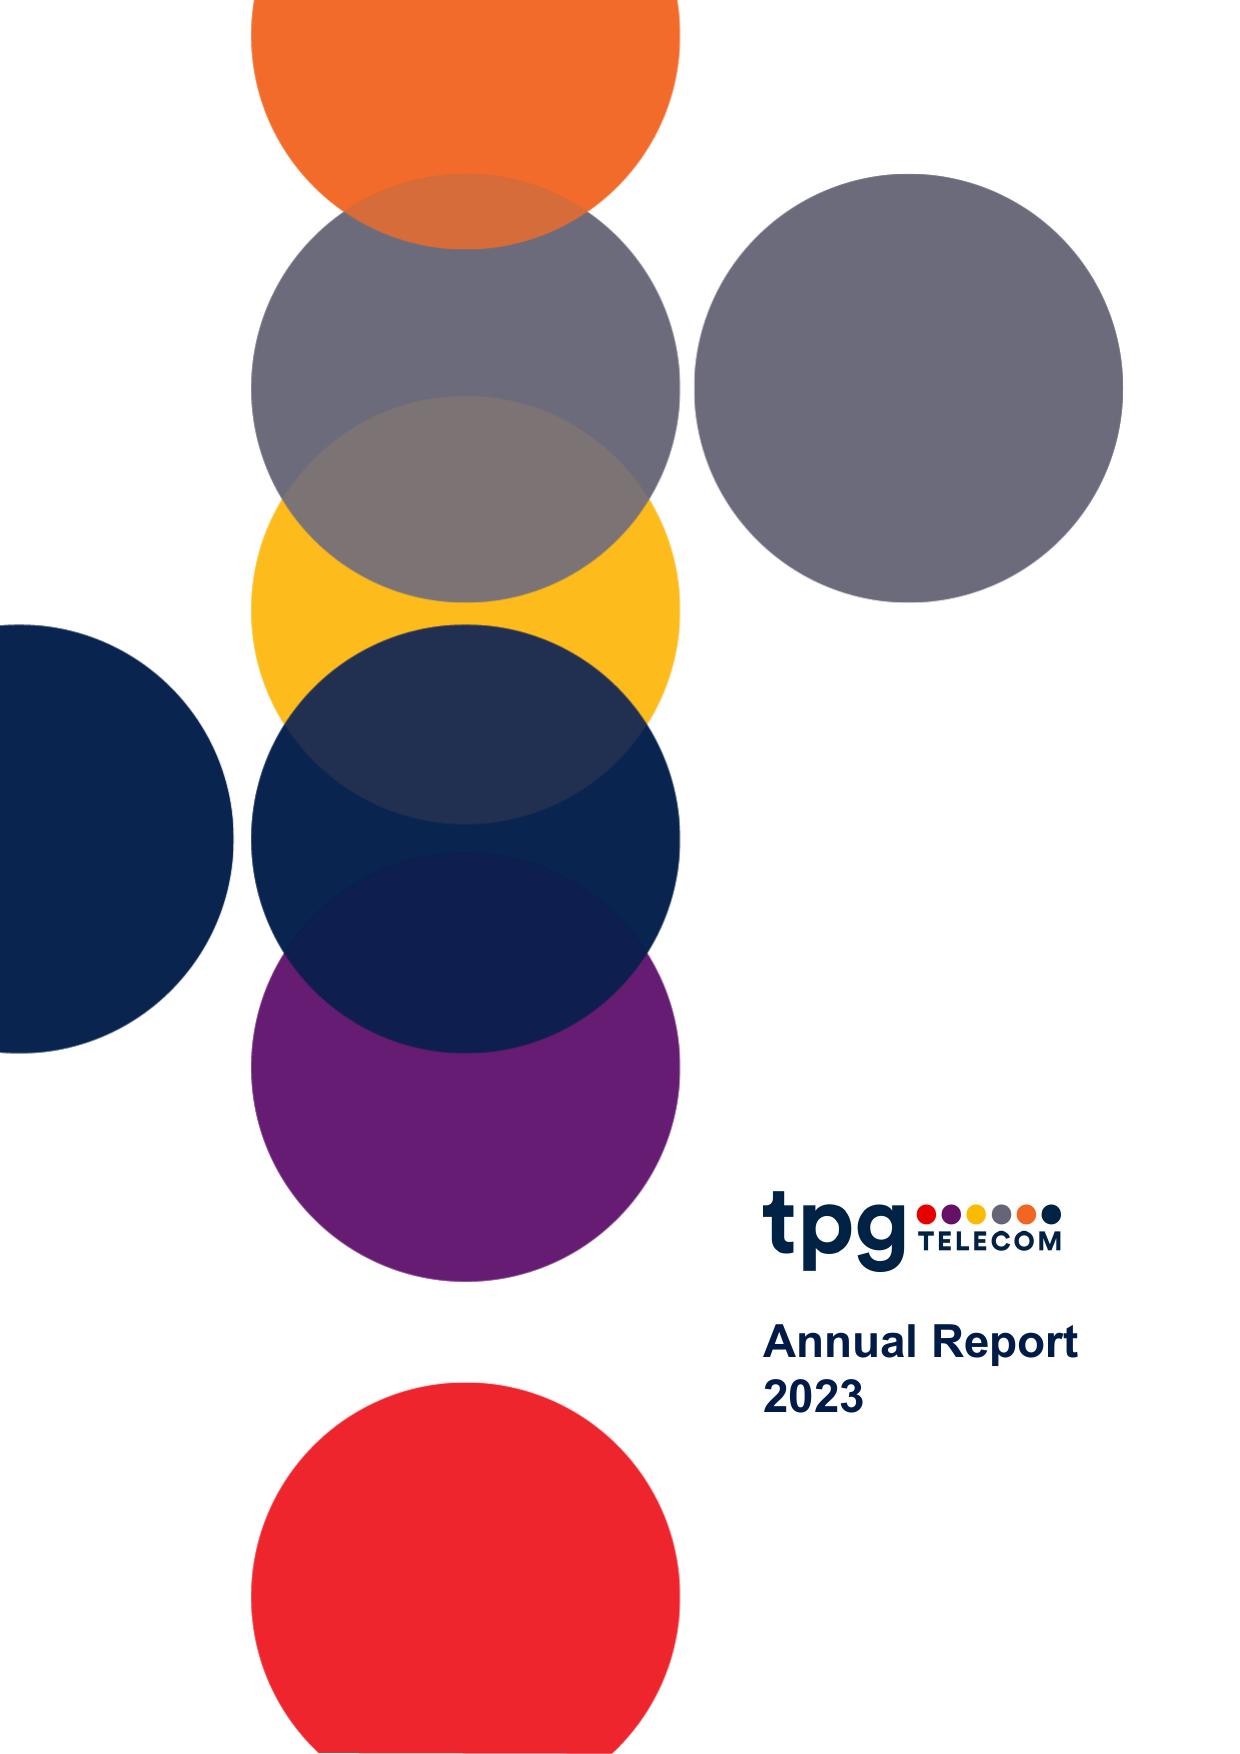 TPGTELECOM 2023 Annual Report